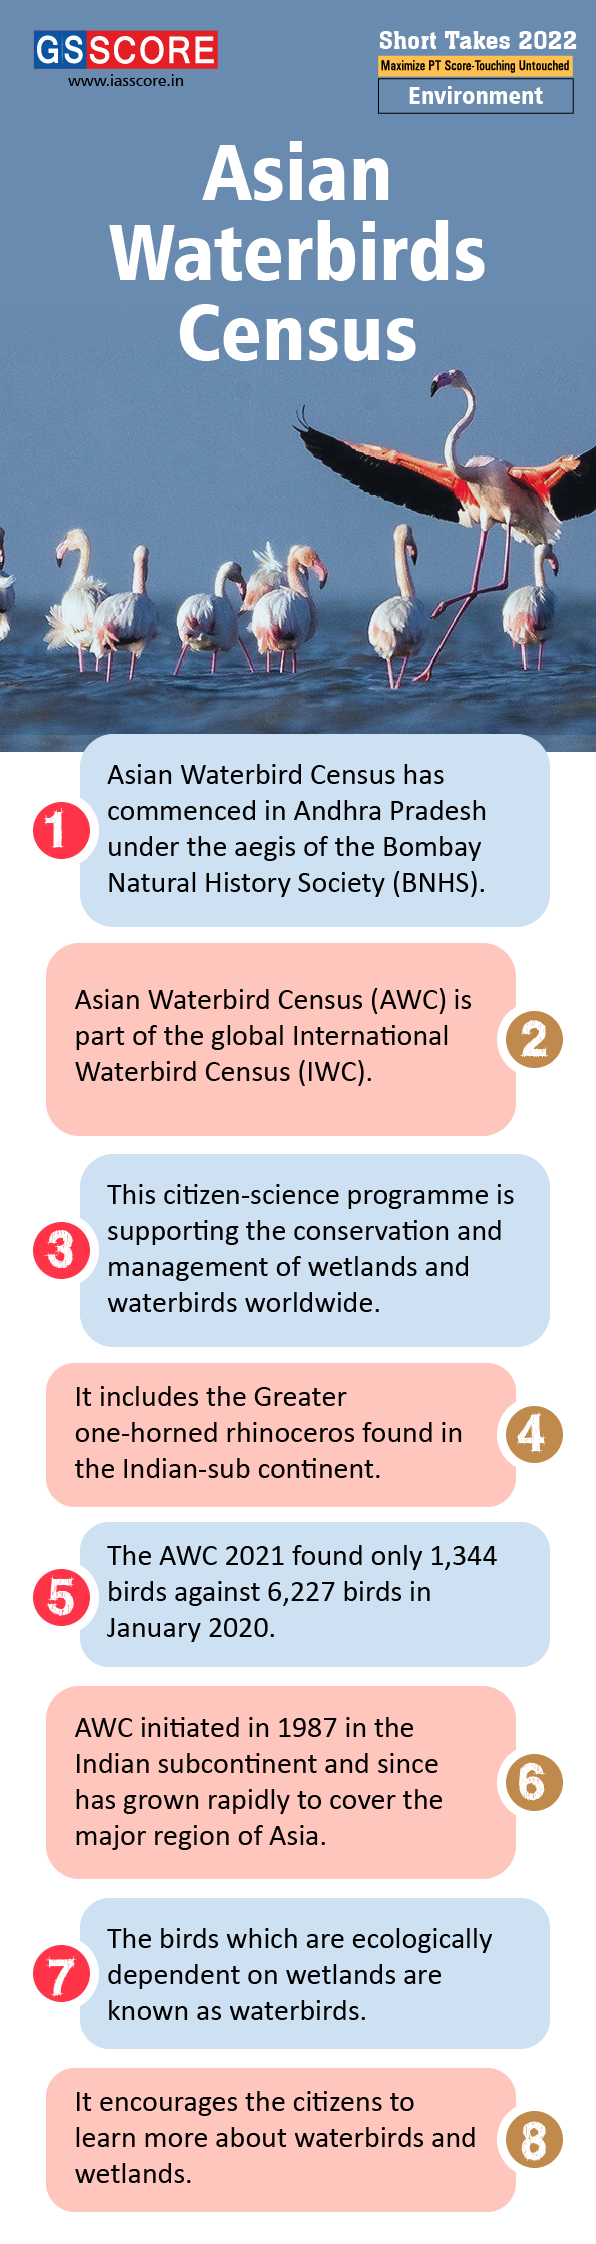 Asian Waterbirds Census